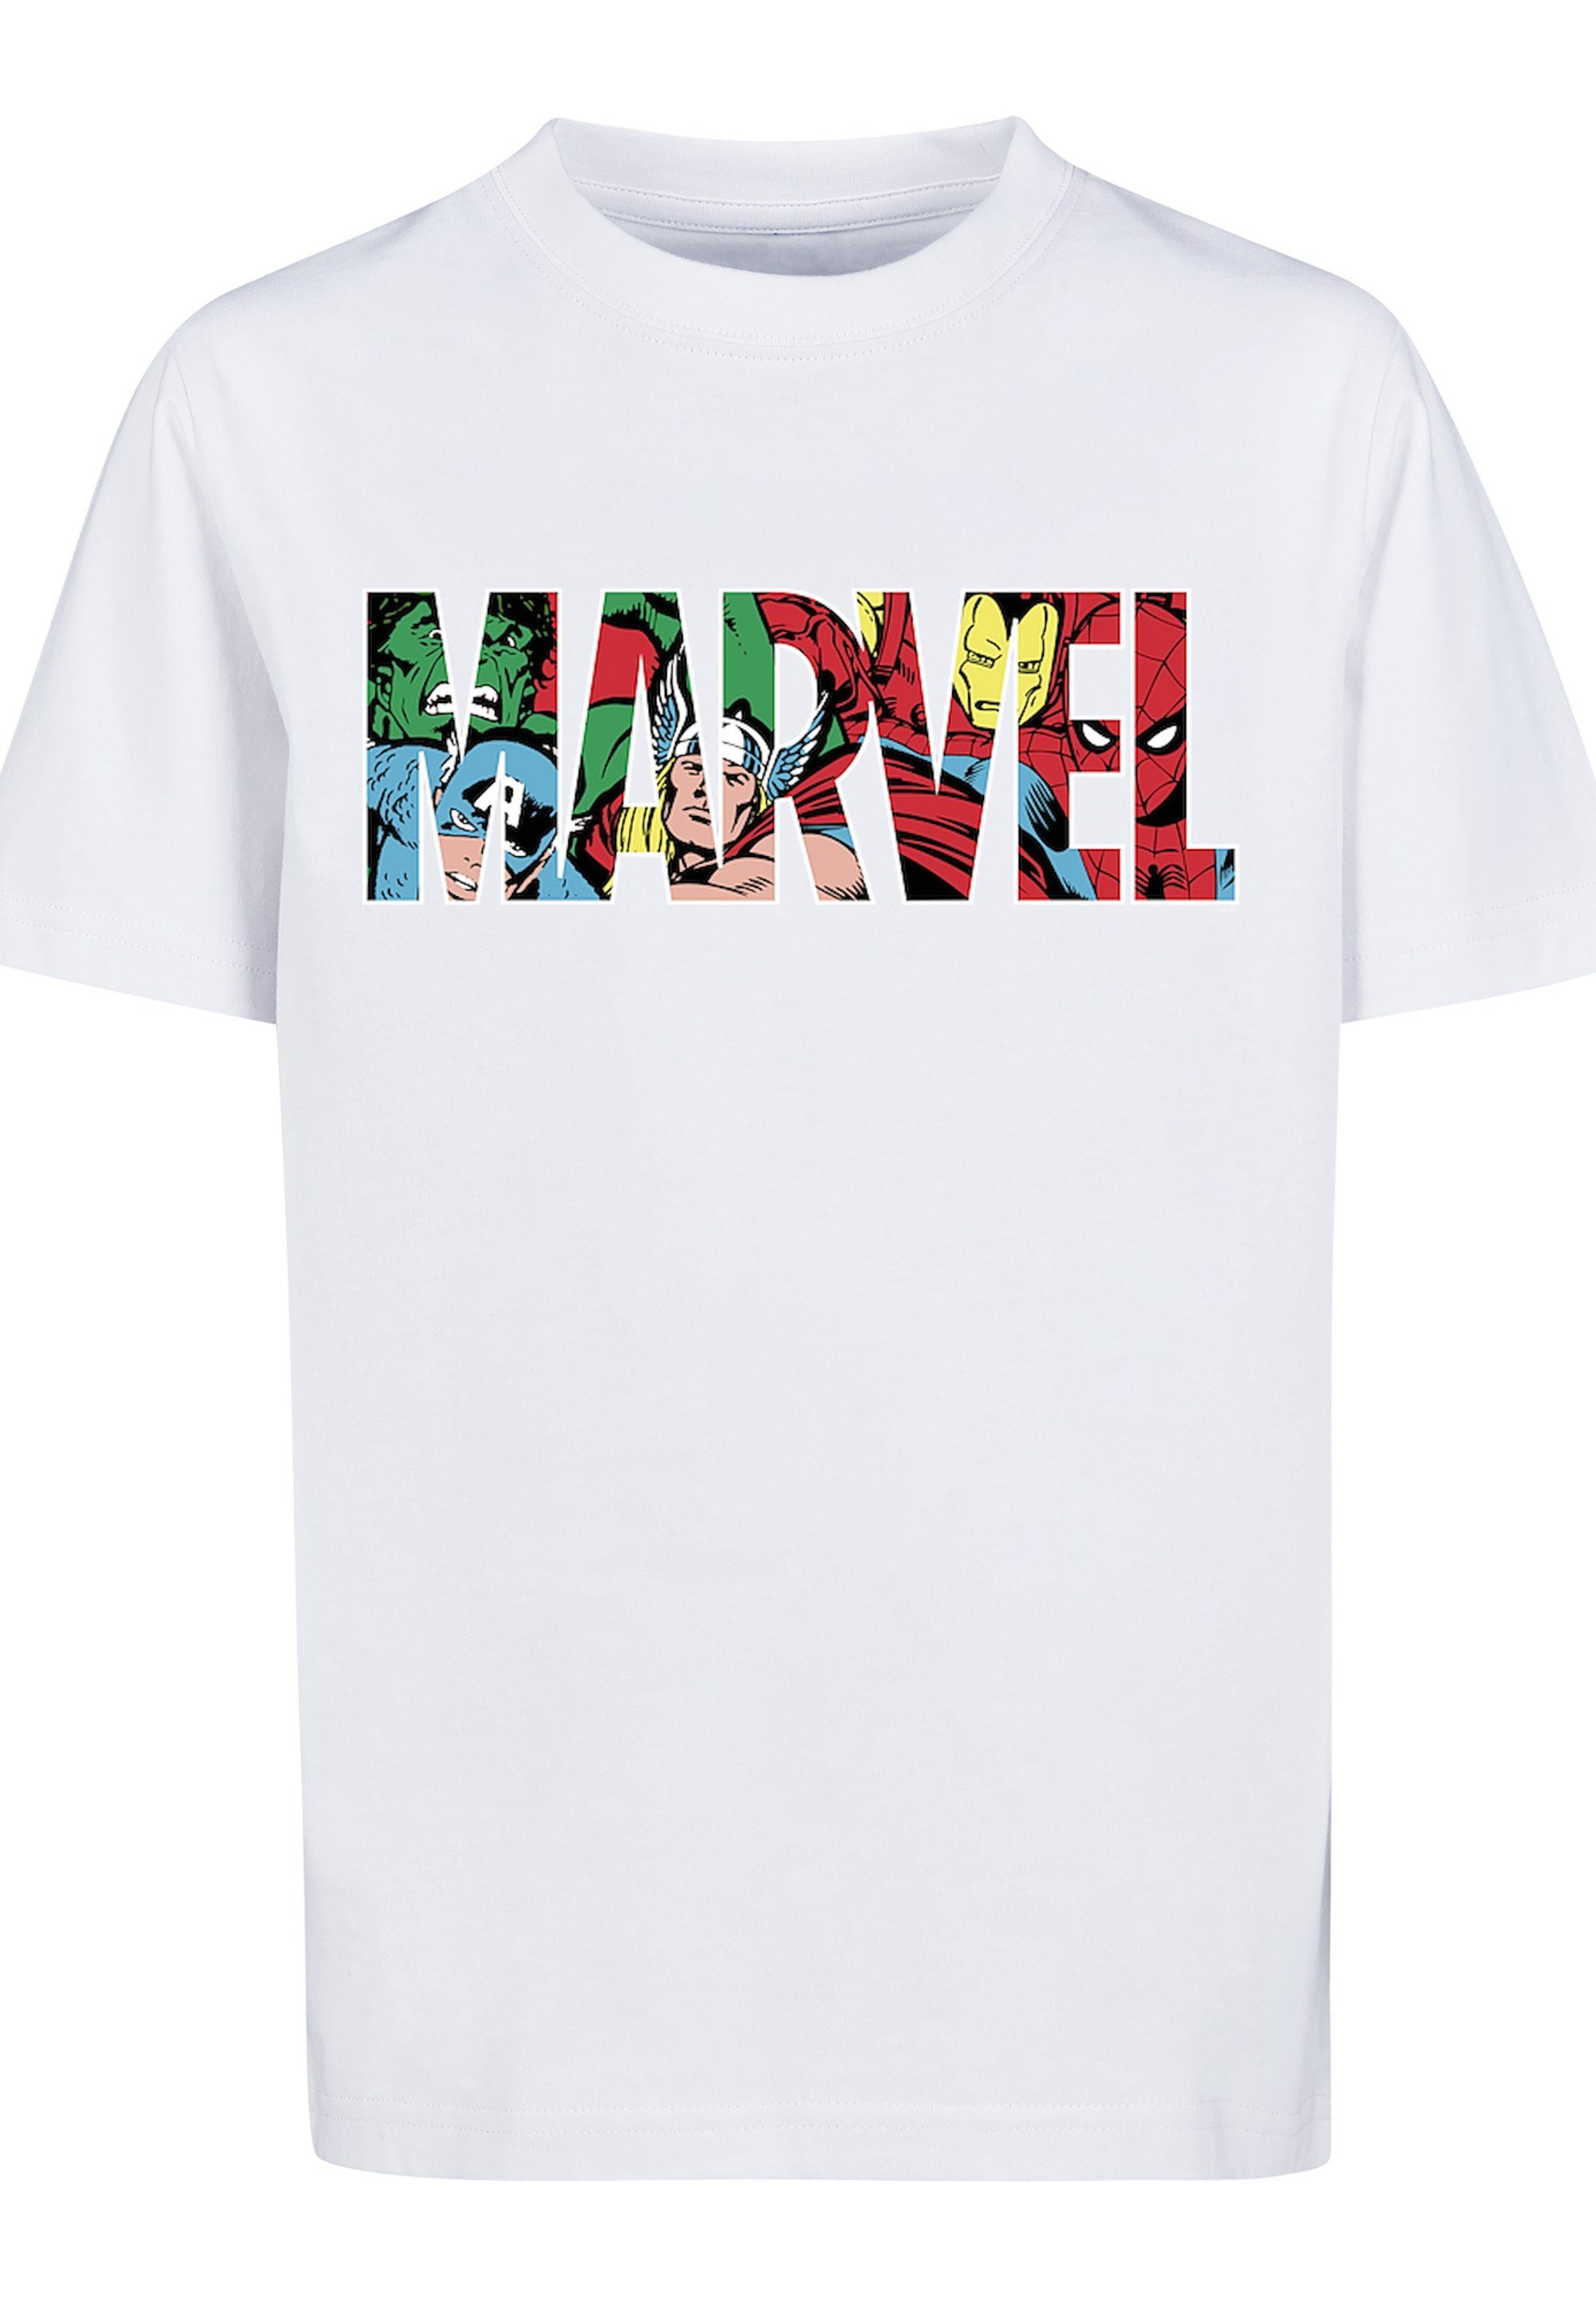 Avengers Merch,Jungen,Mädchen,Logo weiß Kinder,Premium Print T-Shirt Unisex Characters F4NT4STIC Logo Marvel